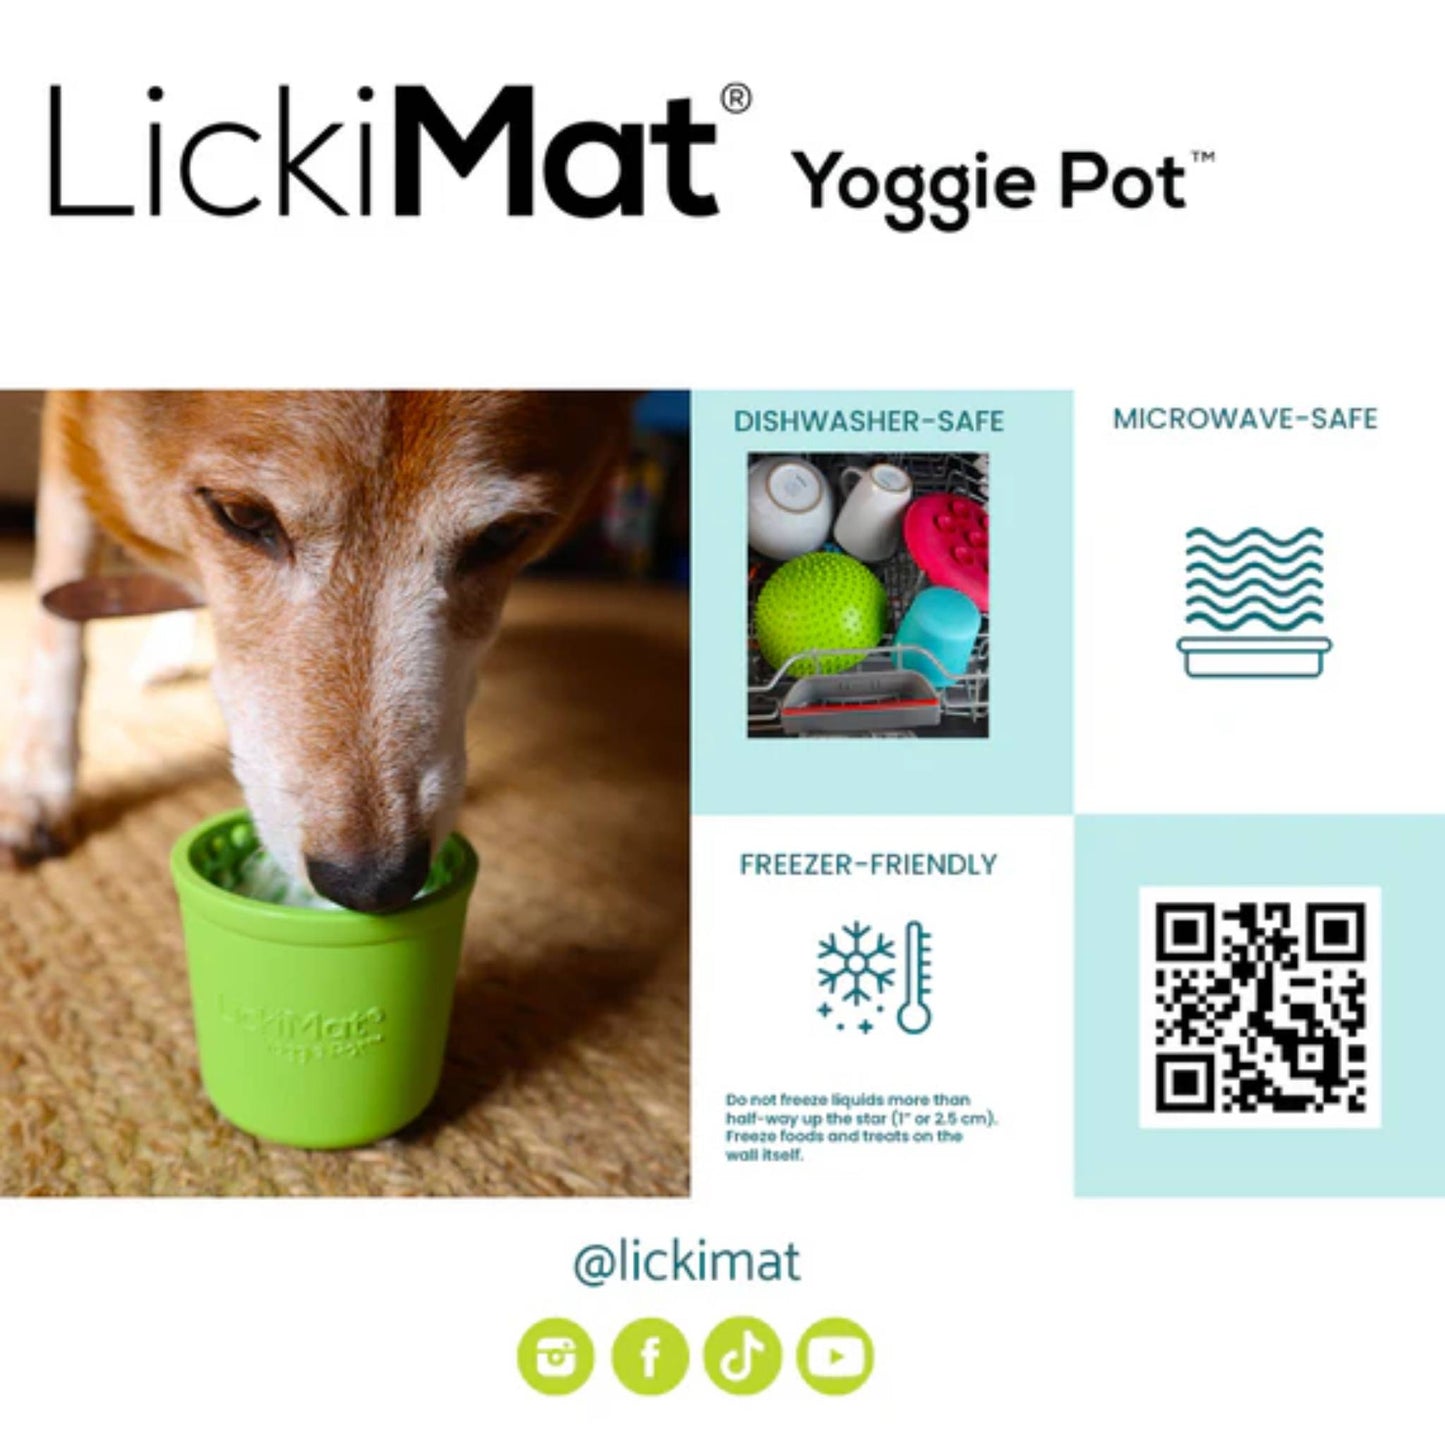 lickimat yoggie pot for dogs care label